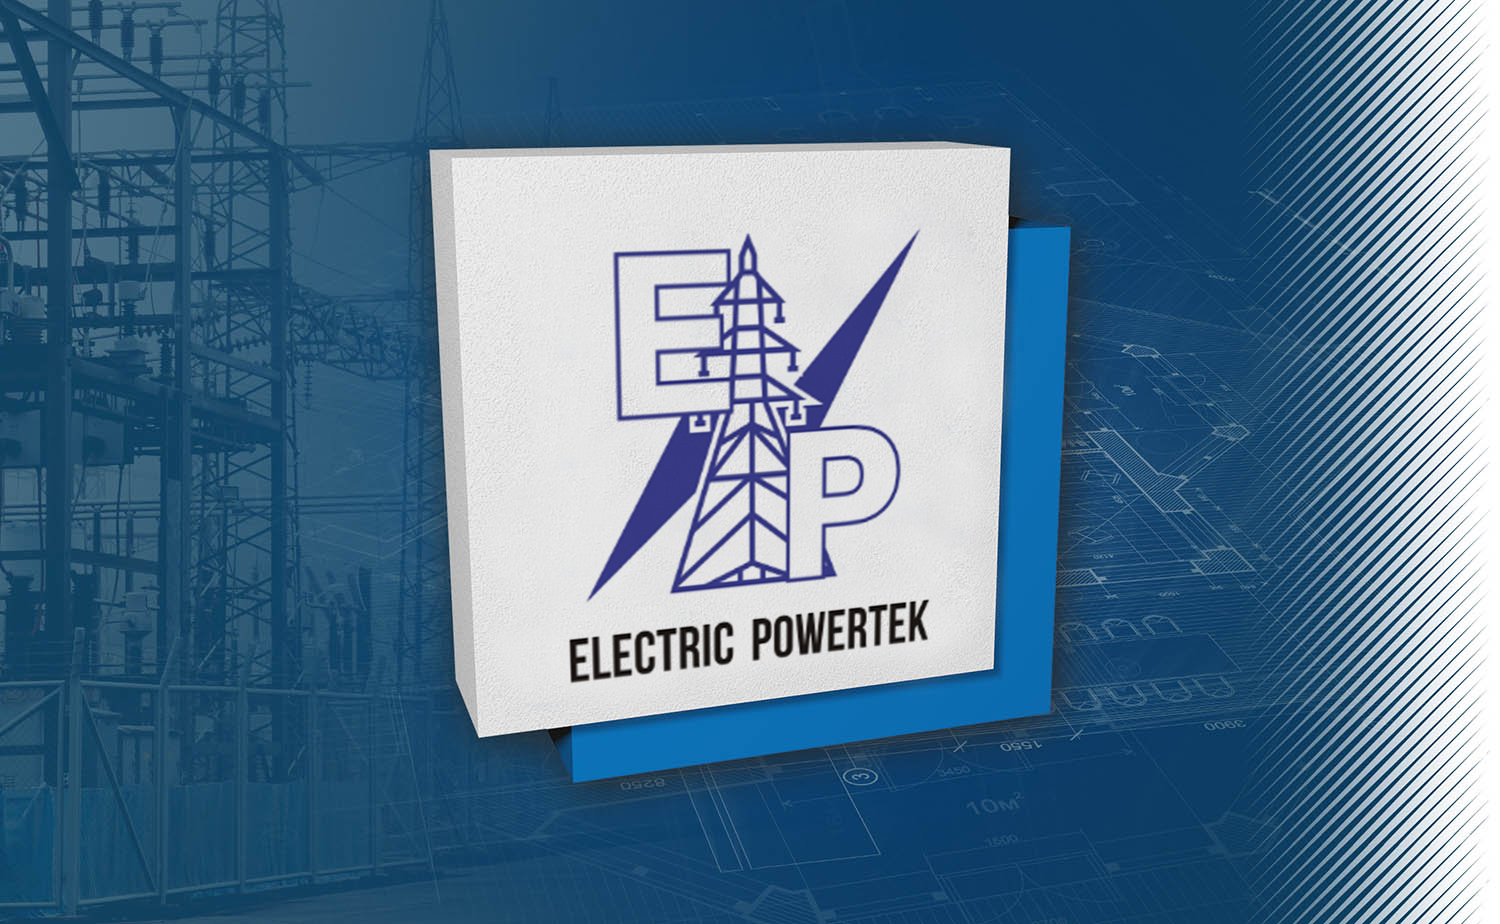 About Electric Powertek